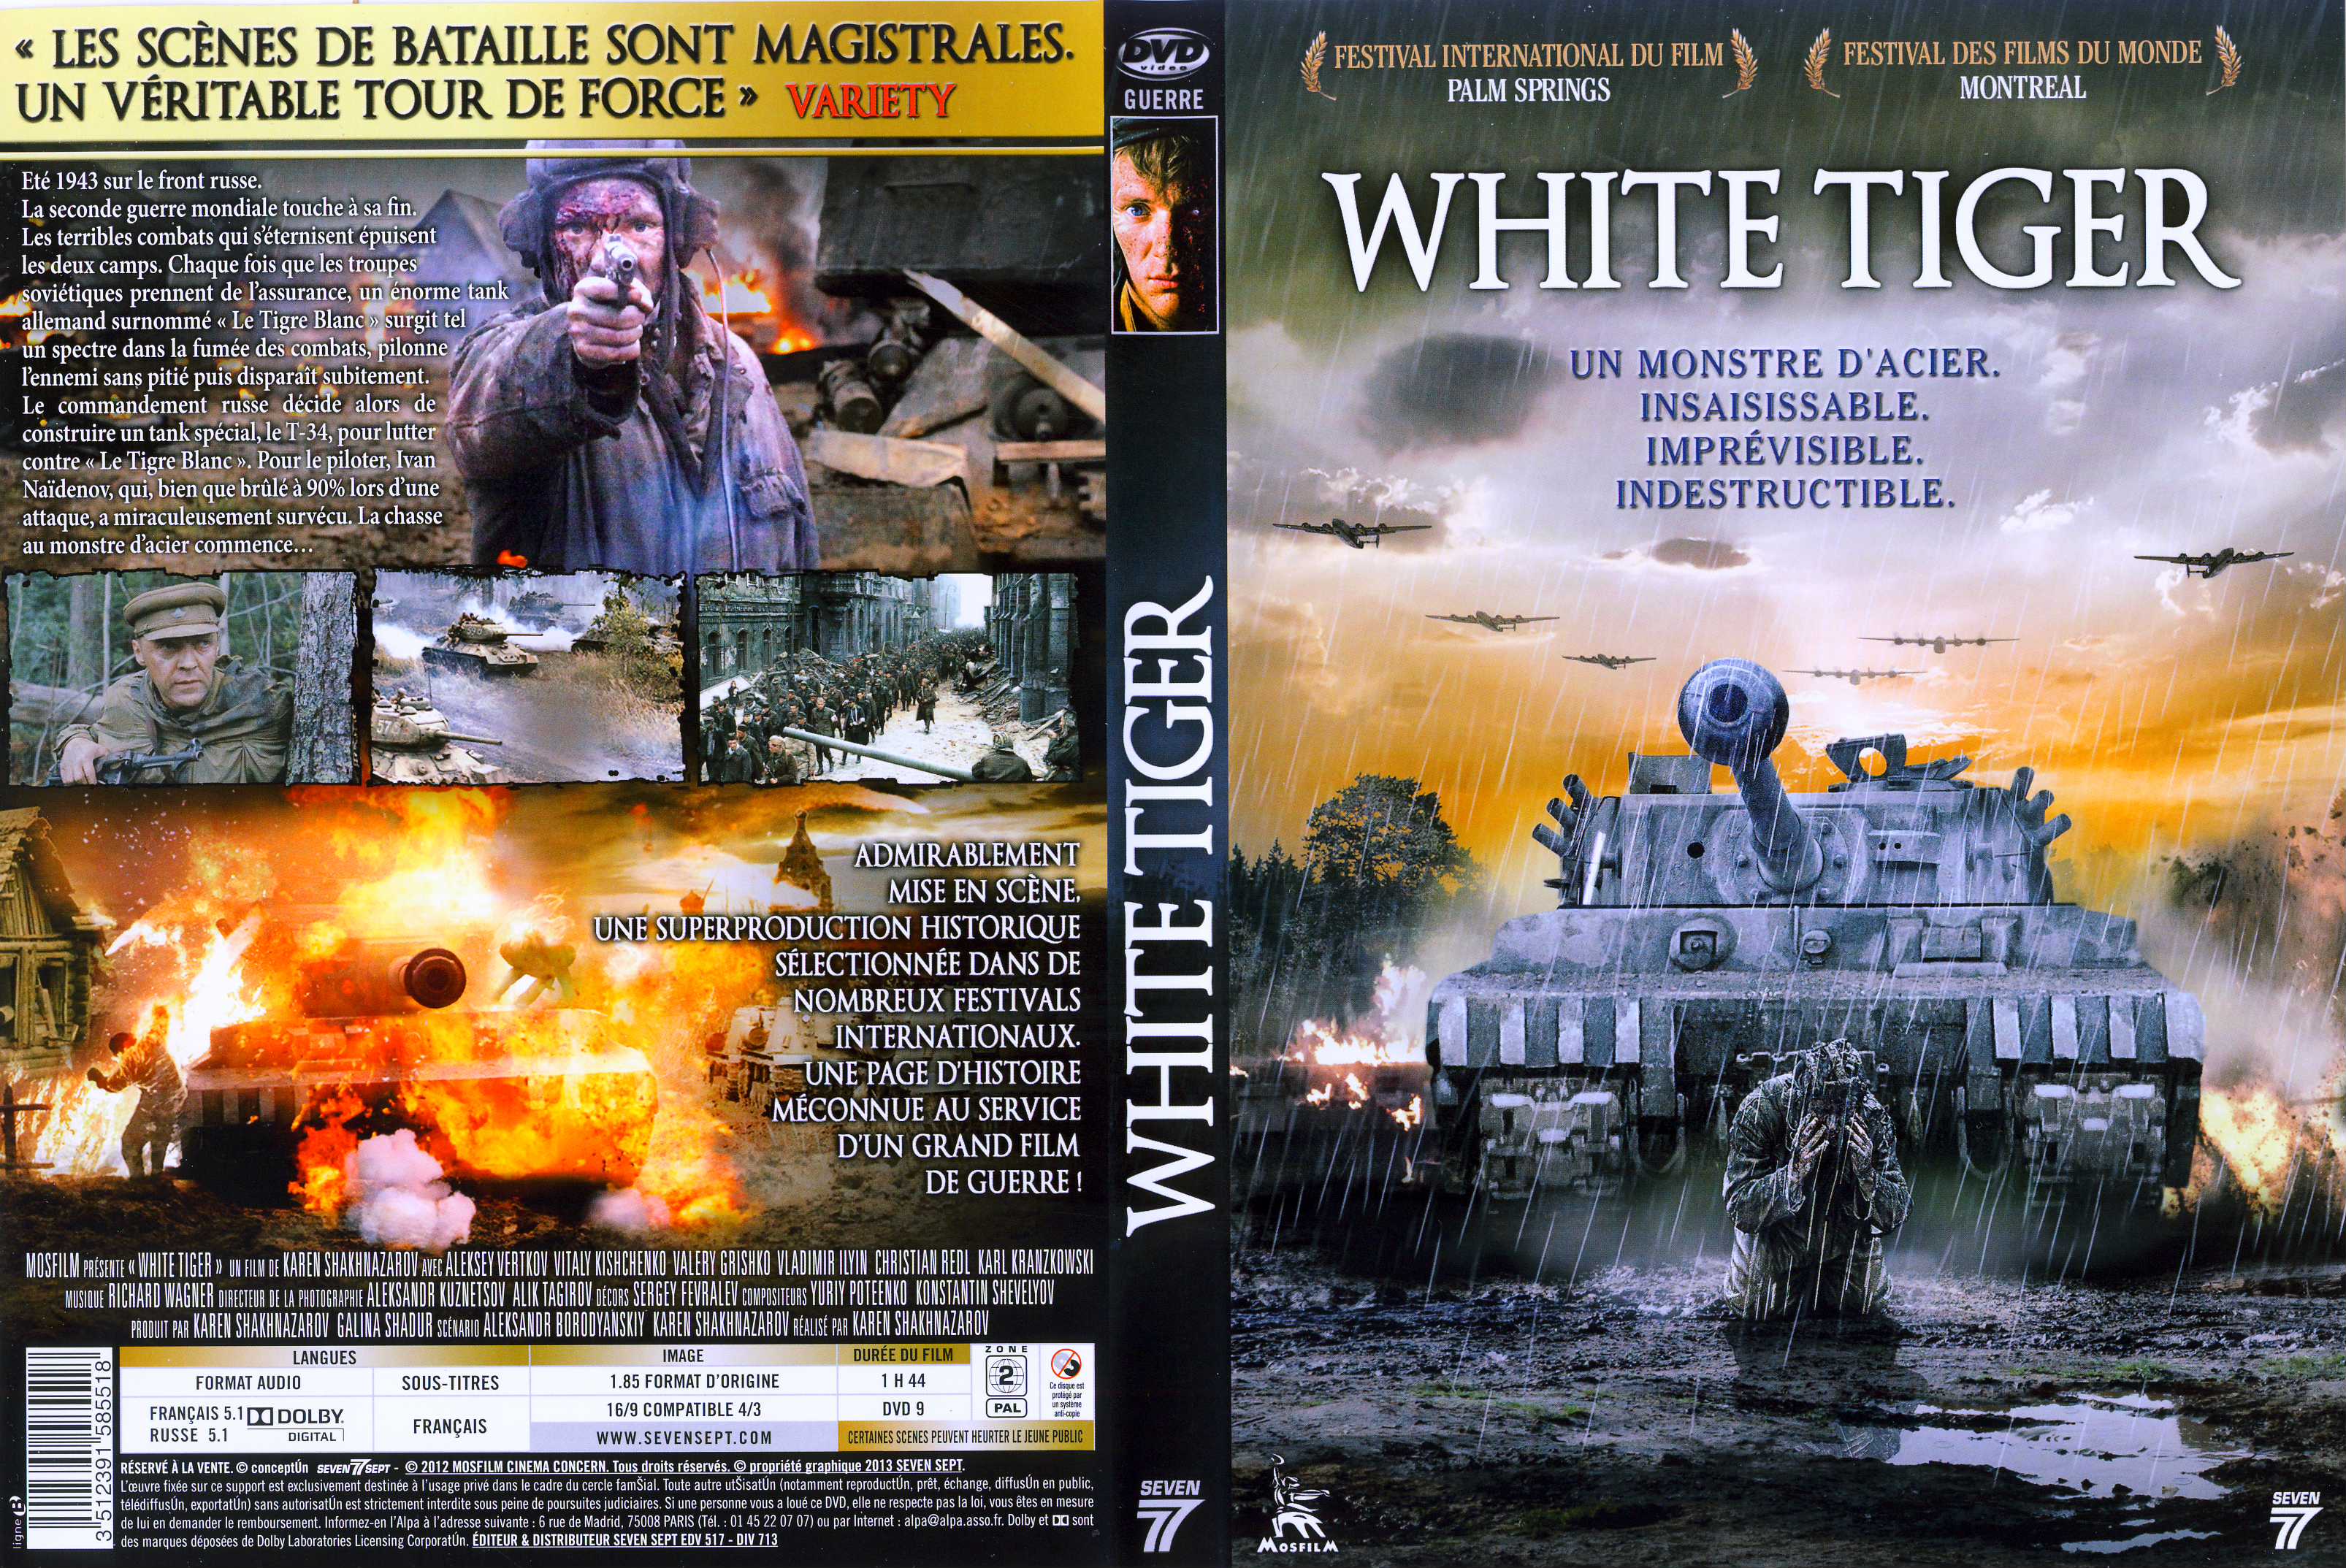 Jaquette DVD White tiger (2012)